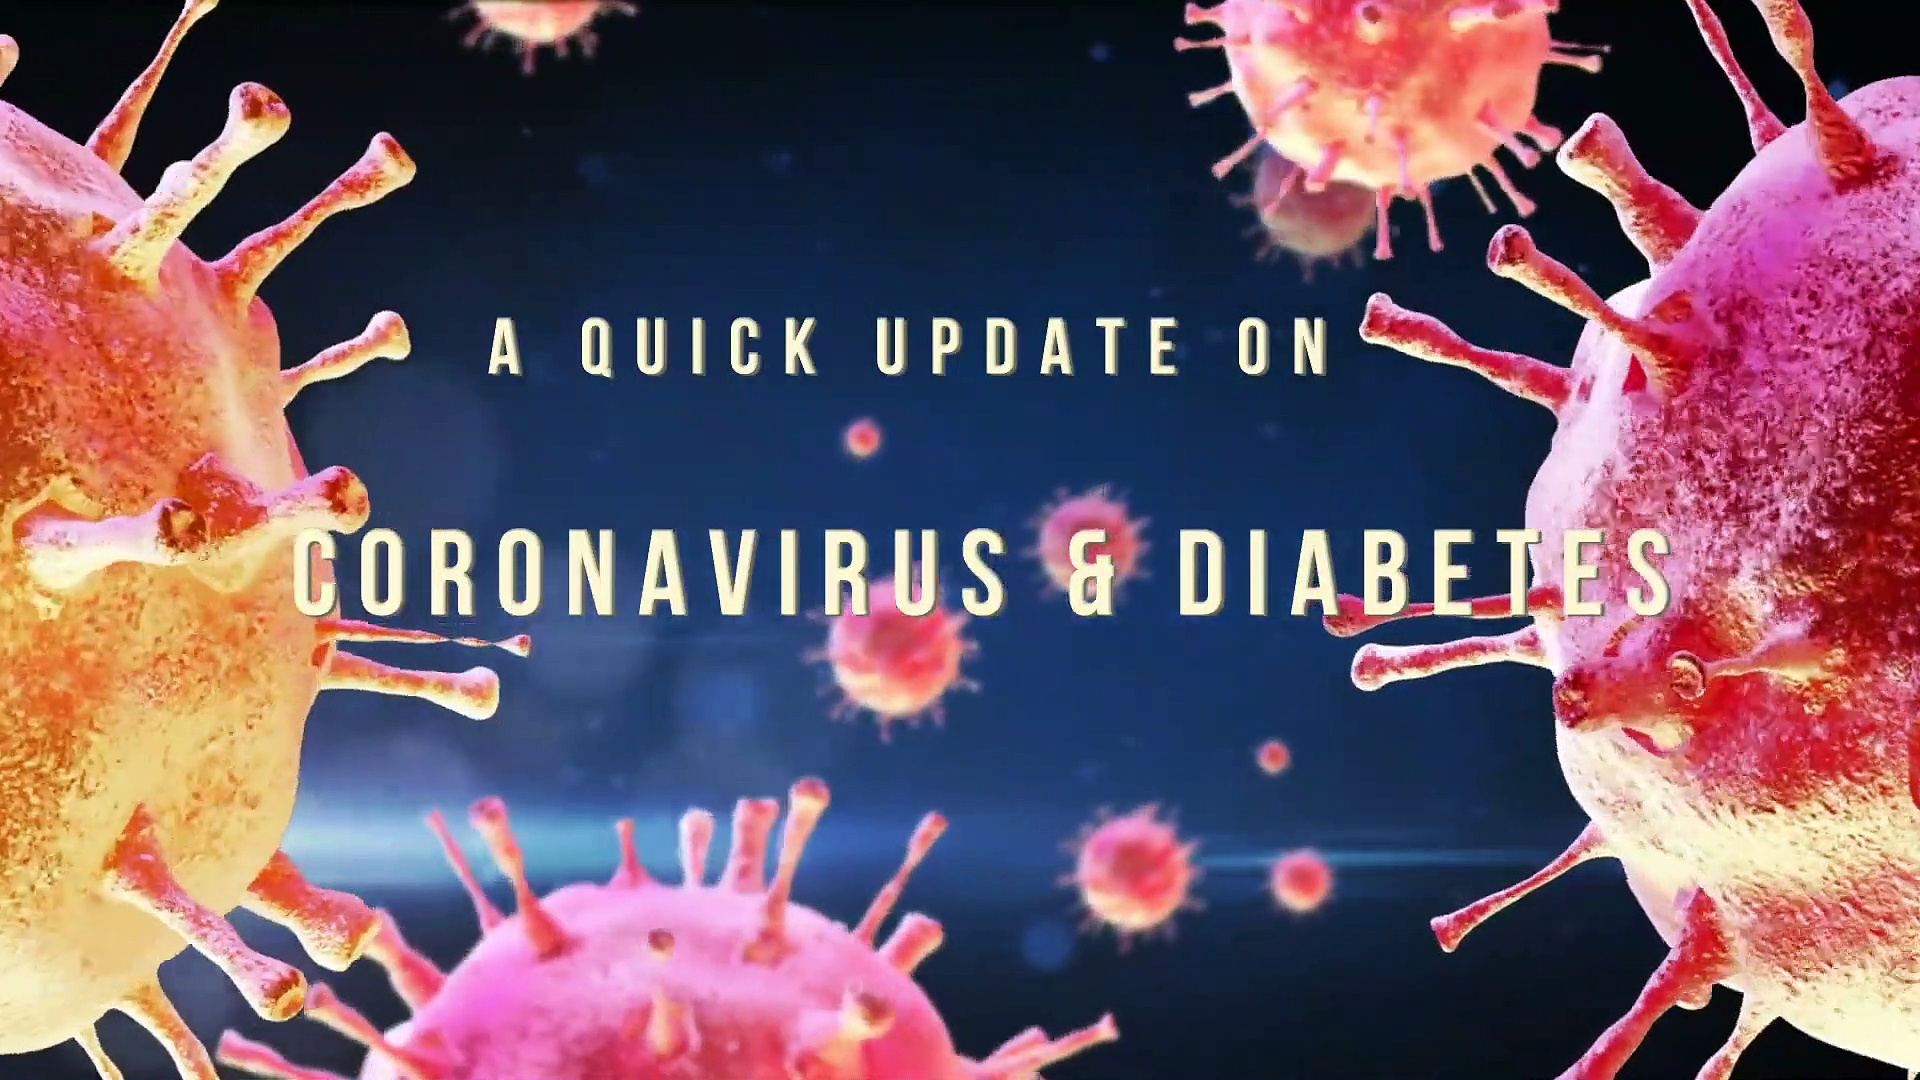 CORONAVIRUS Diabetes Recovery Research Update. COVID 19 Diabetes Survival news update.